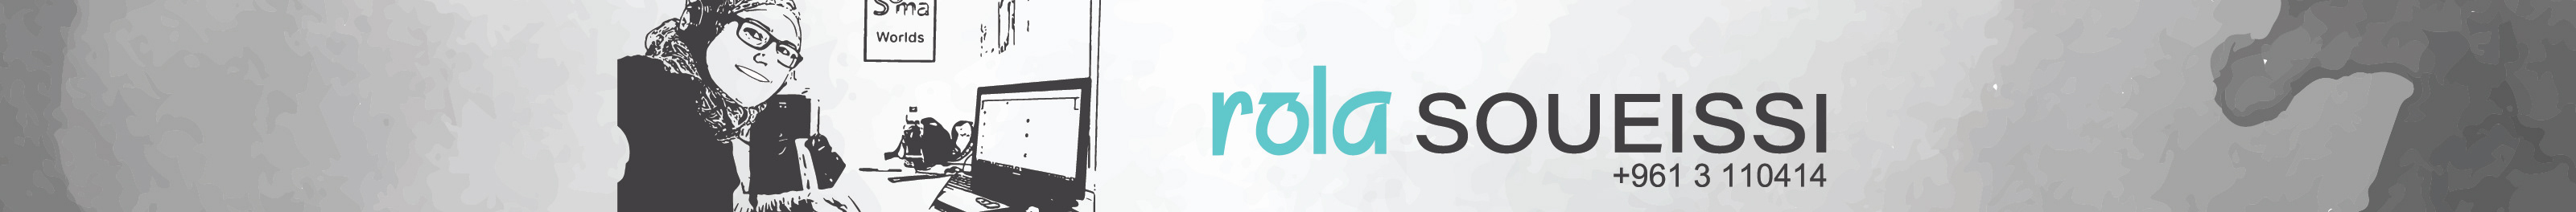 rola soueissi's profile banner